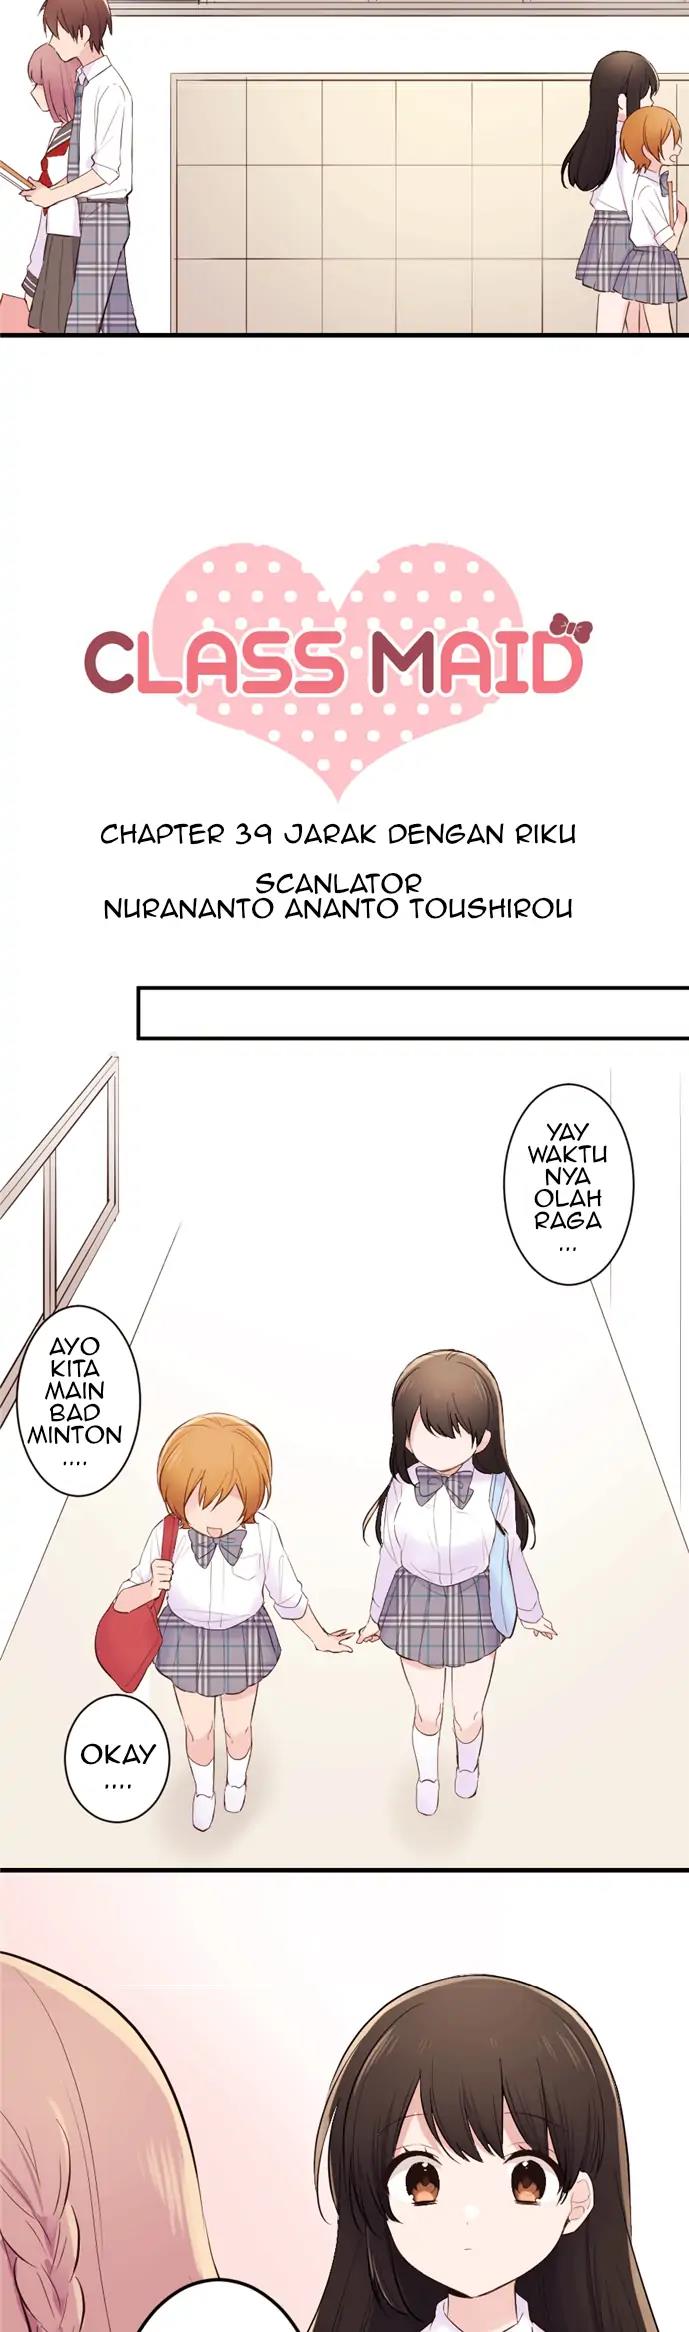 Class Maid (Shimamura) Chapter 39